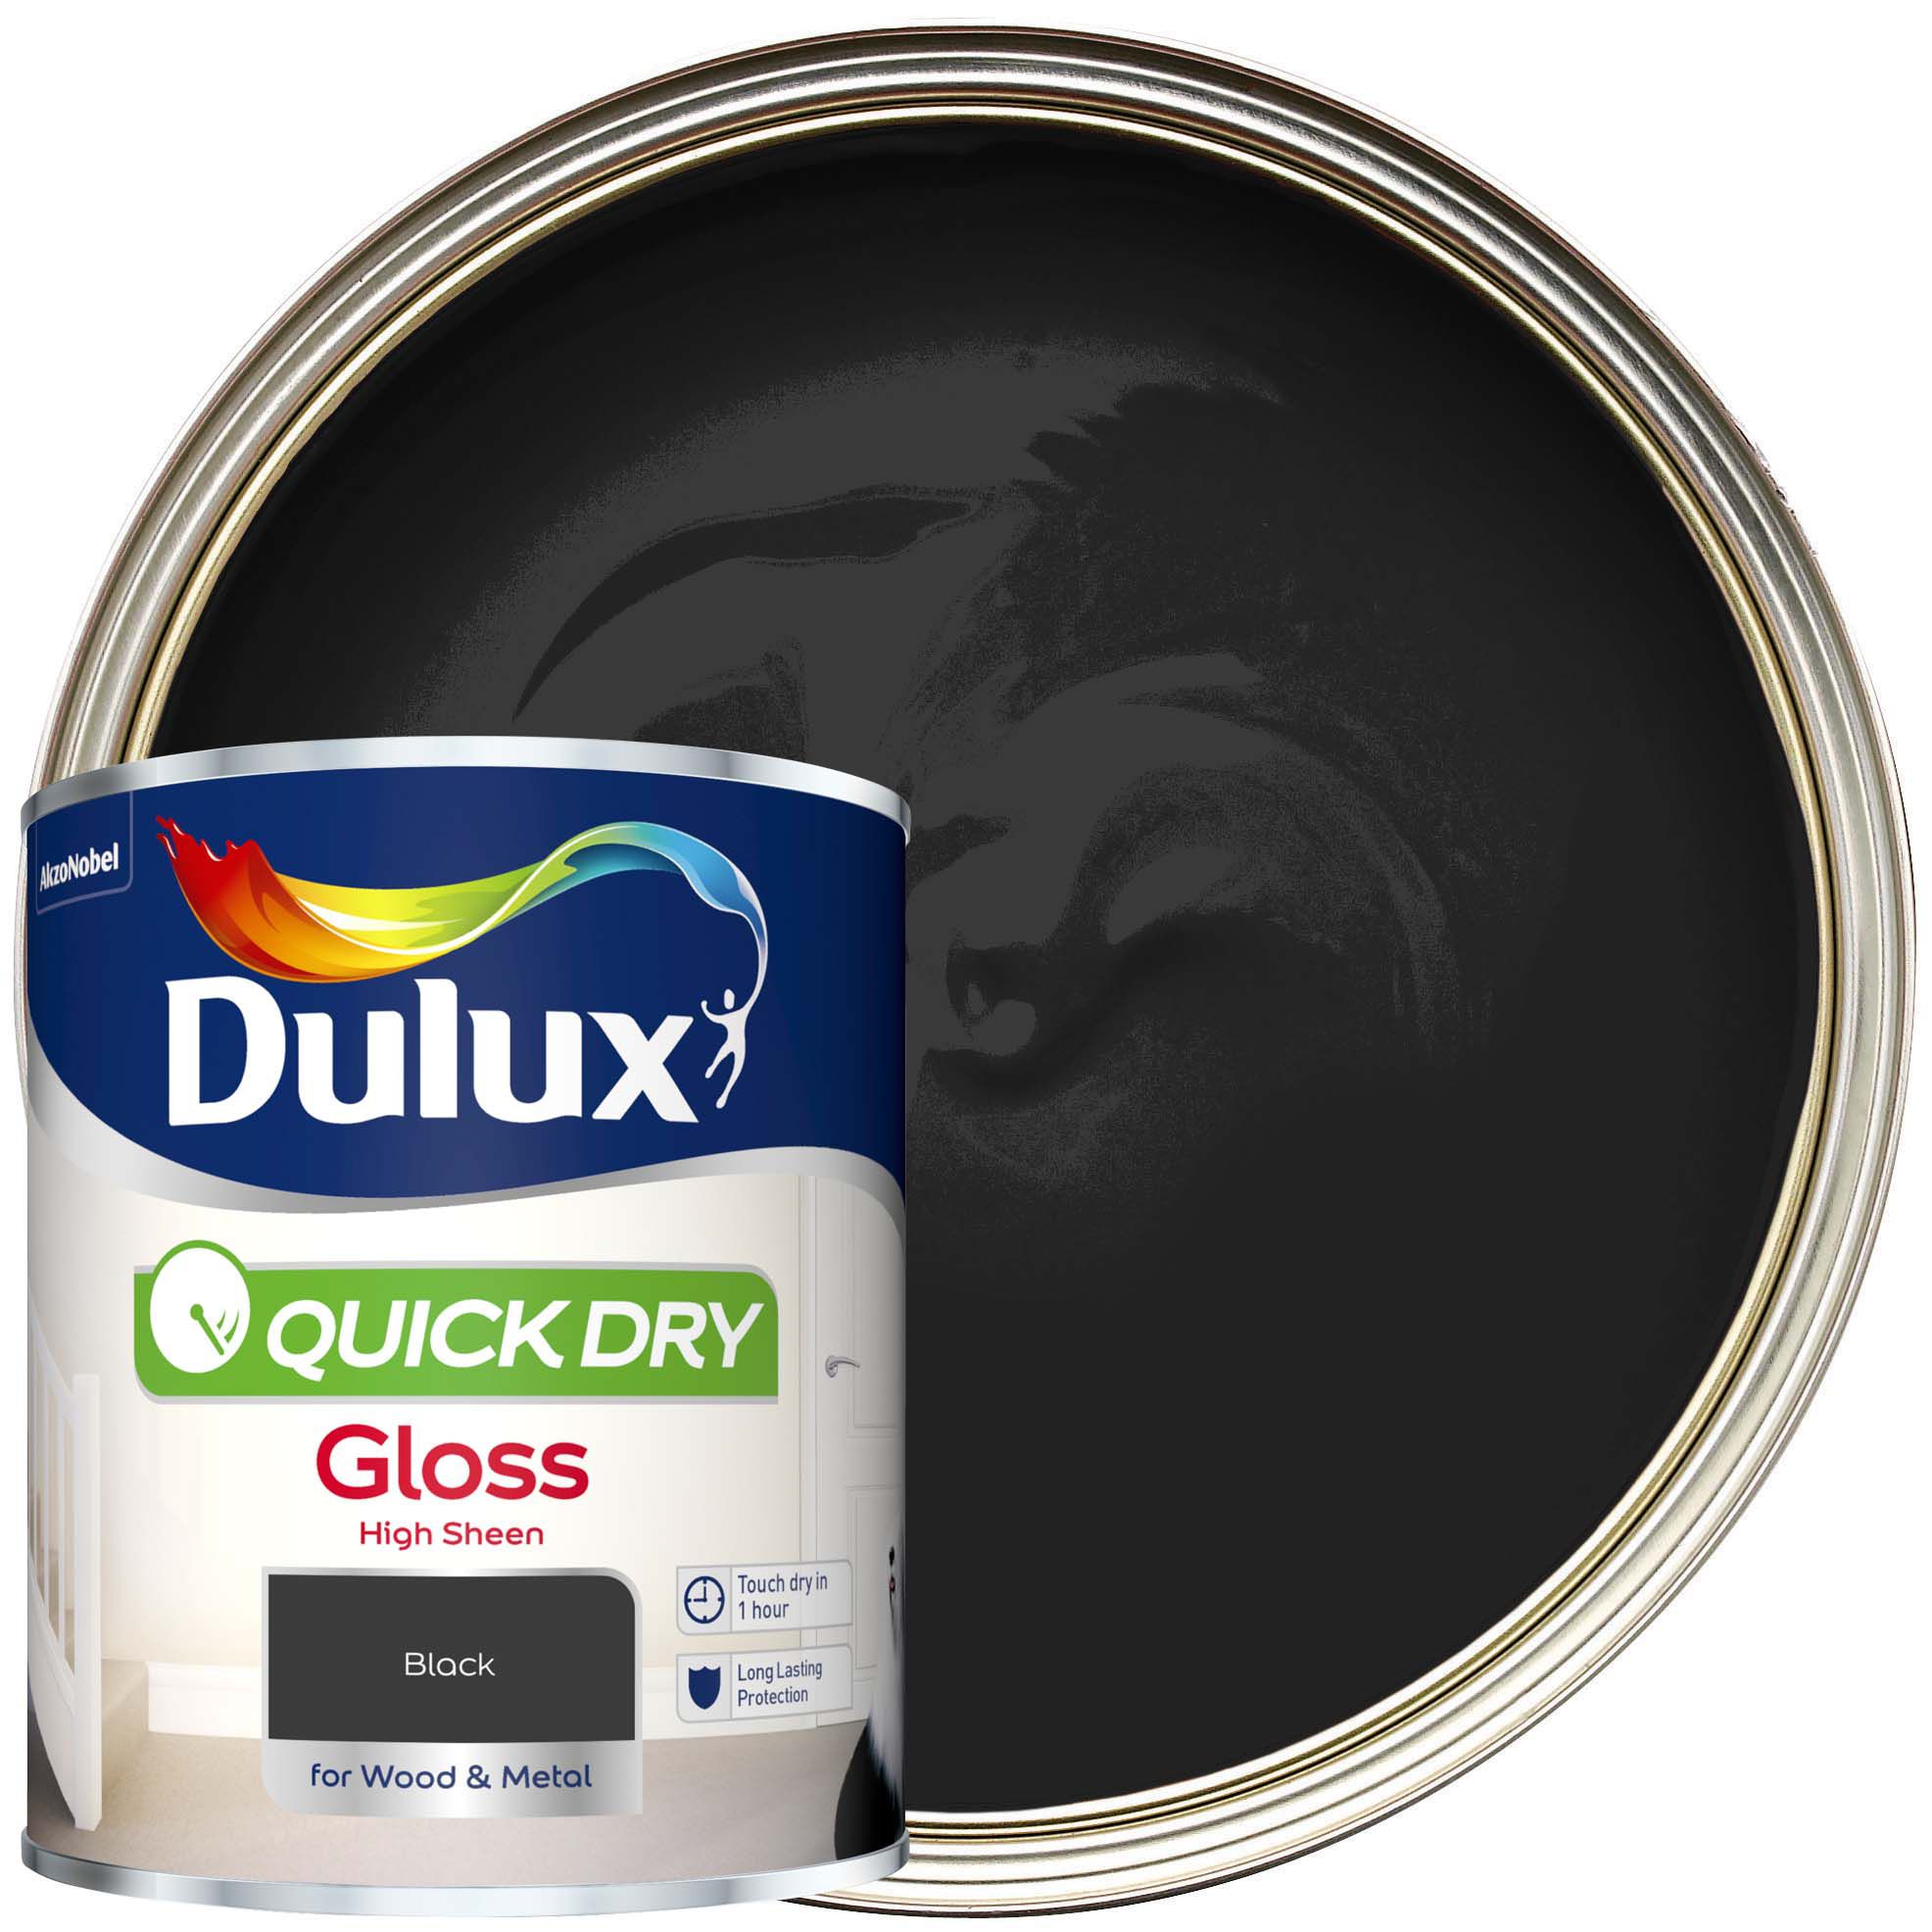 Image of Dulux Quick Dry Gloss Paint - Black Paint - 750ml